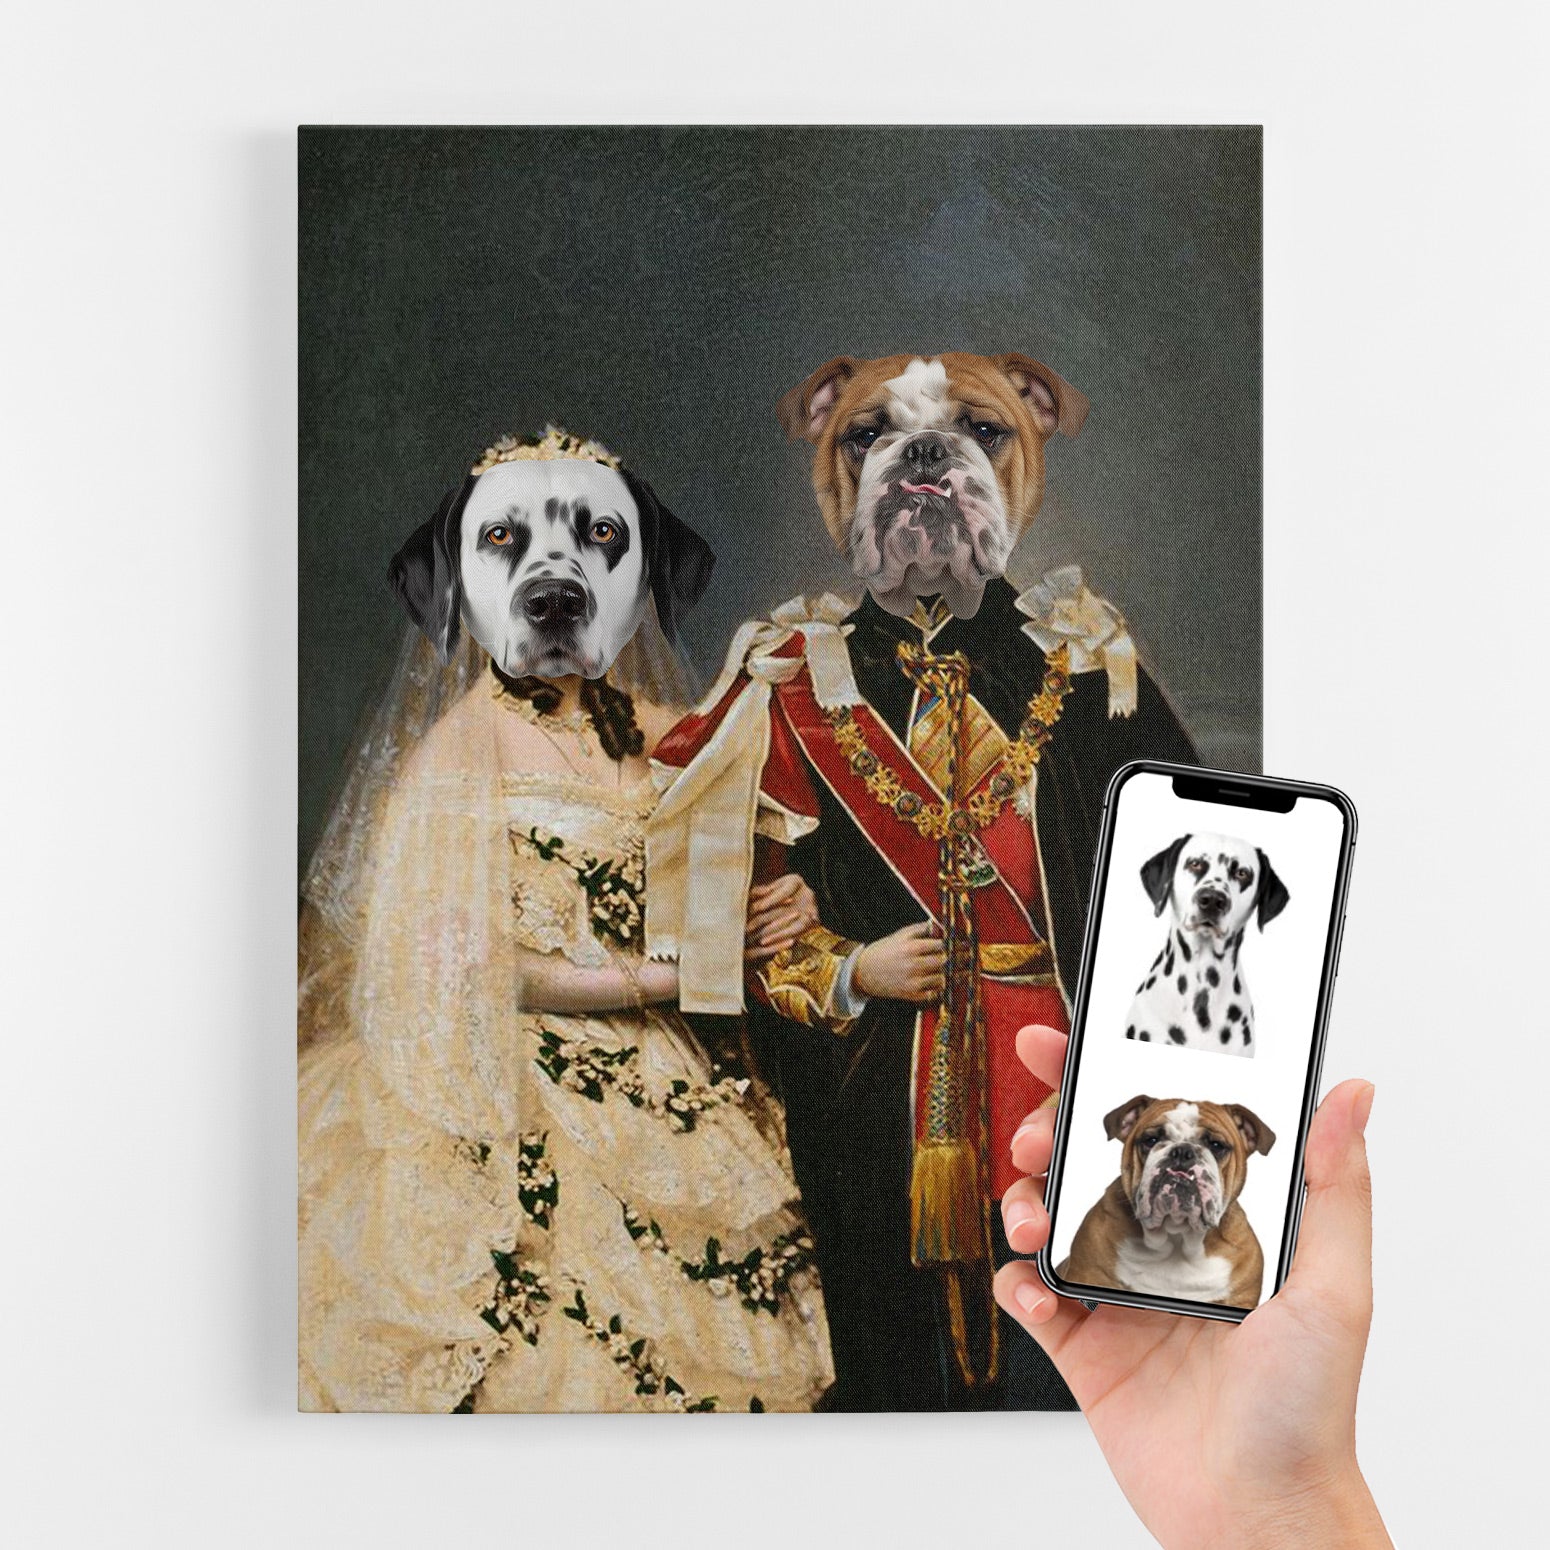 Royal Historical King & Queen Dog Portrait